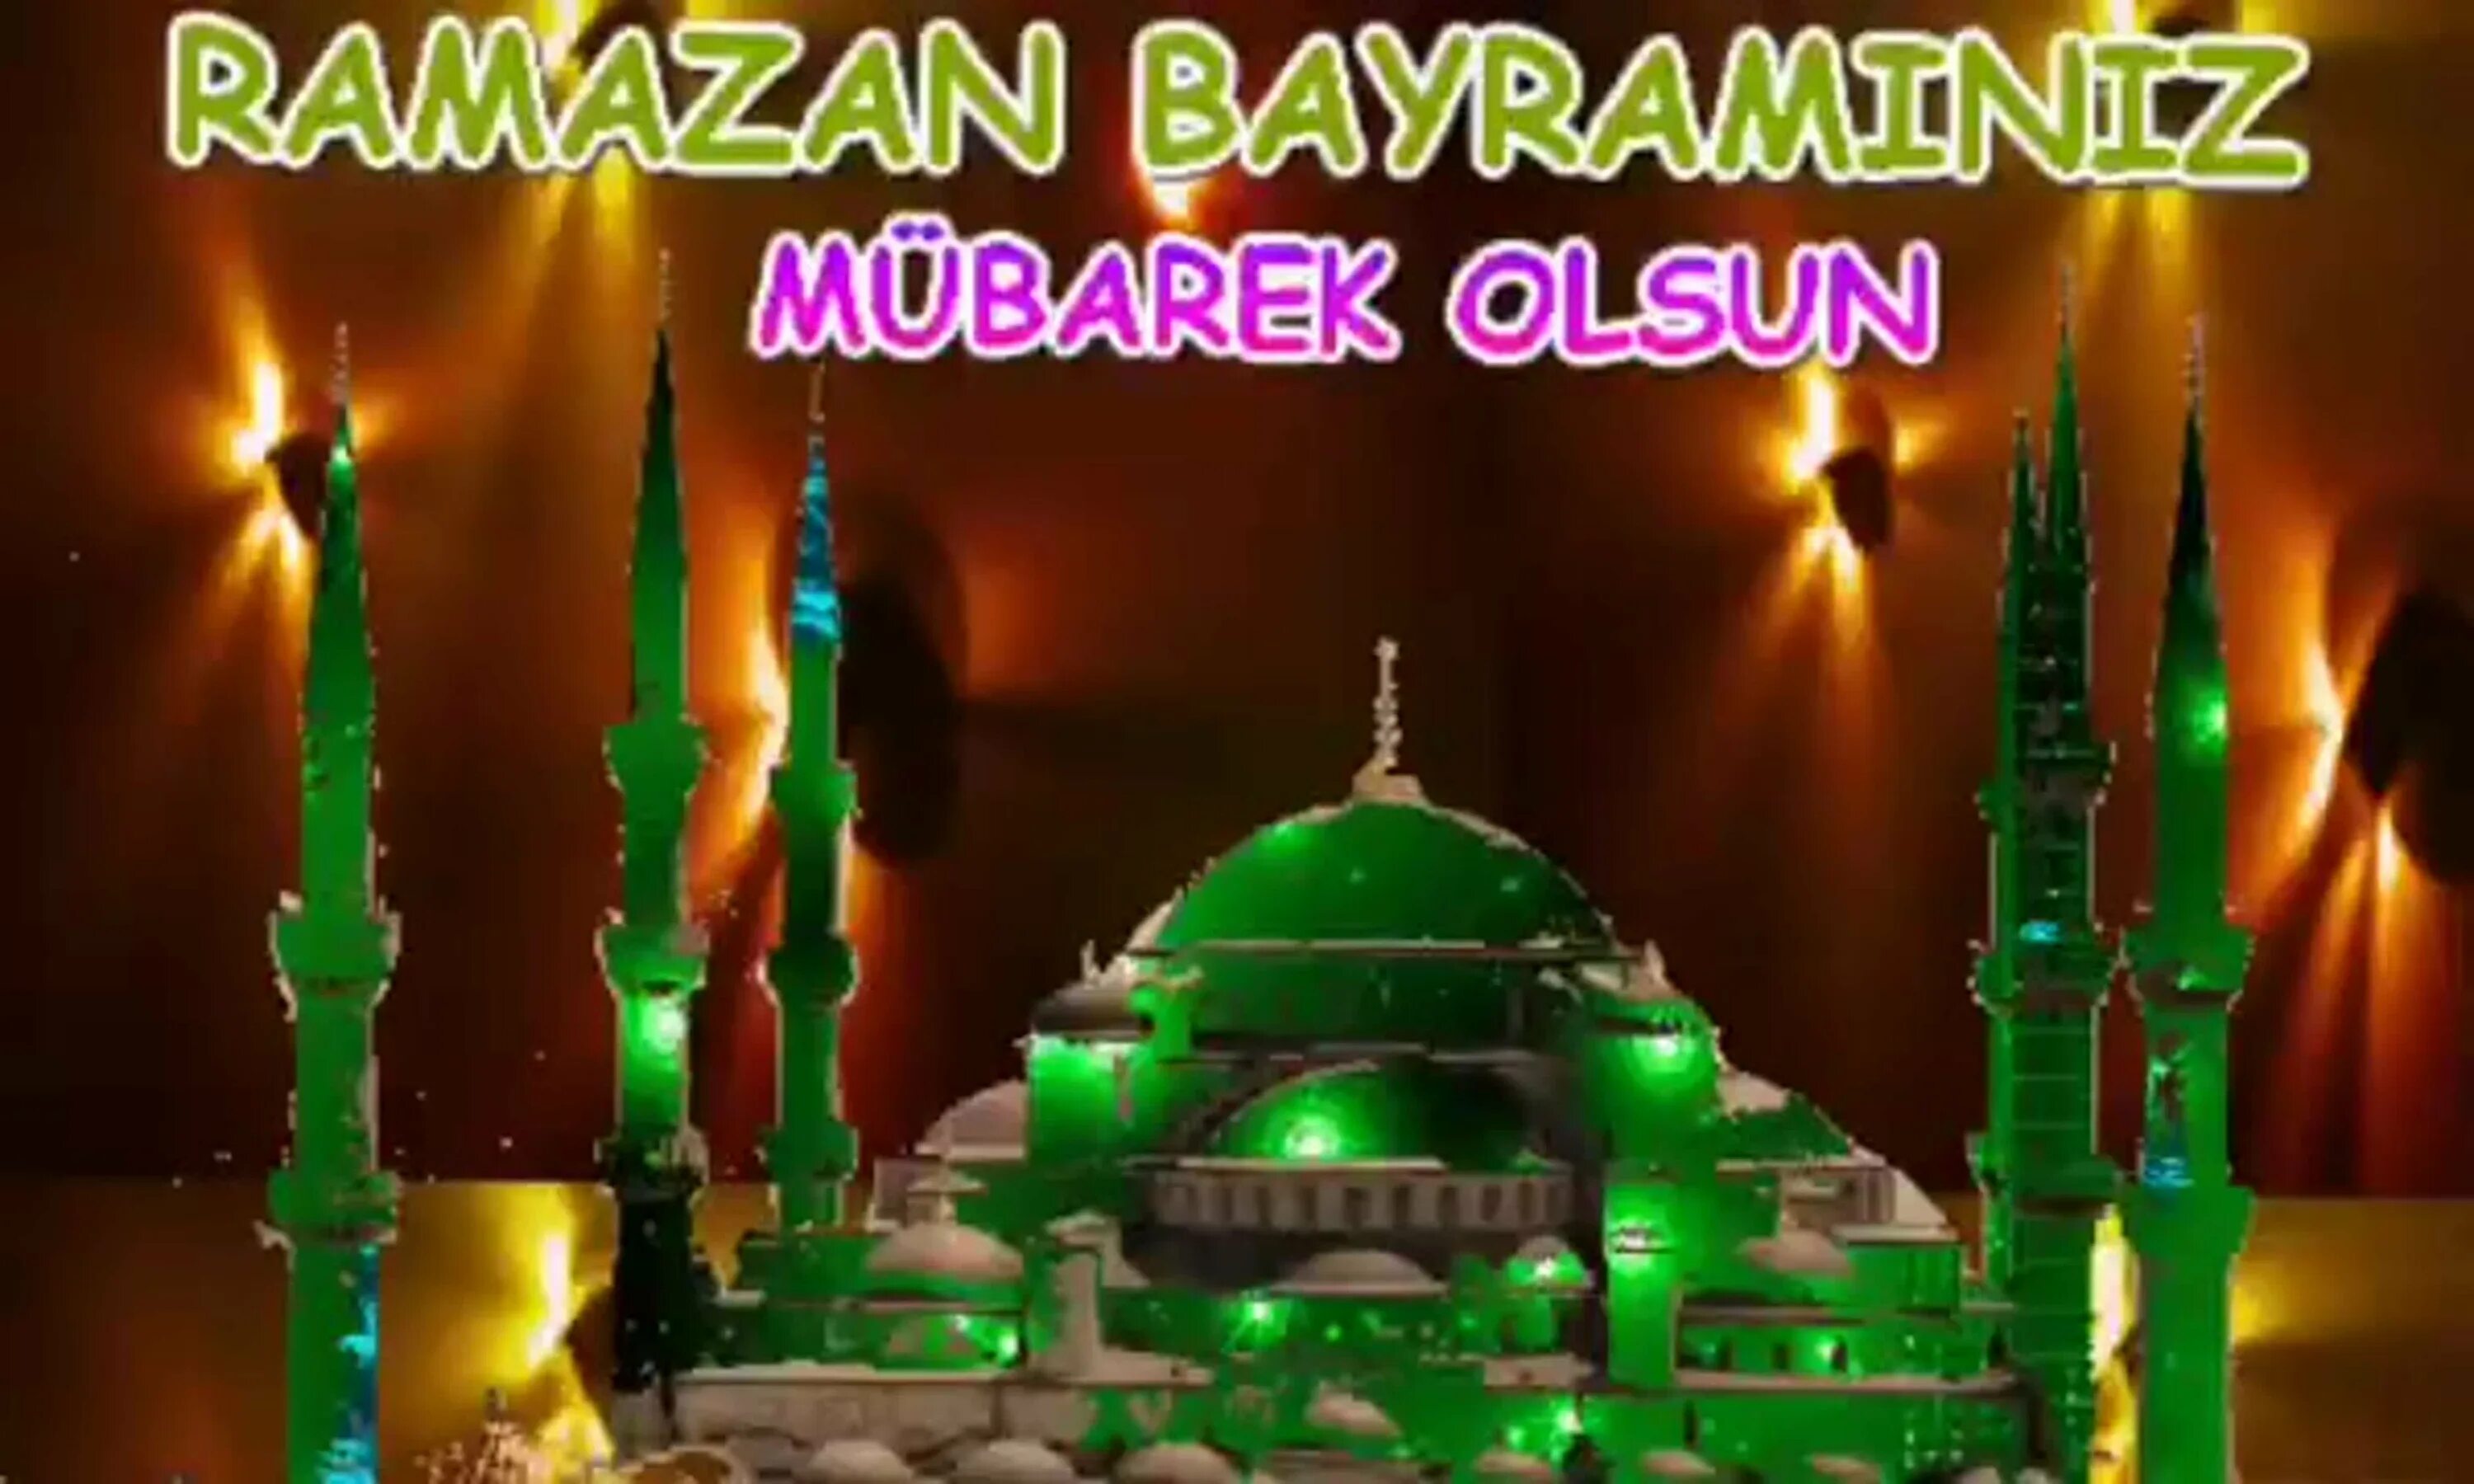 Поздравление с рамаданом на турецком языке. Рамазан байрам Мубарек. Ураза Bayraminiz mubarek. Рамазан байрам Мубарек олсун. Рамазан байрамыныз Мубарек.